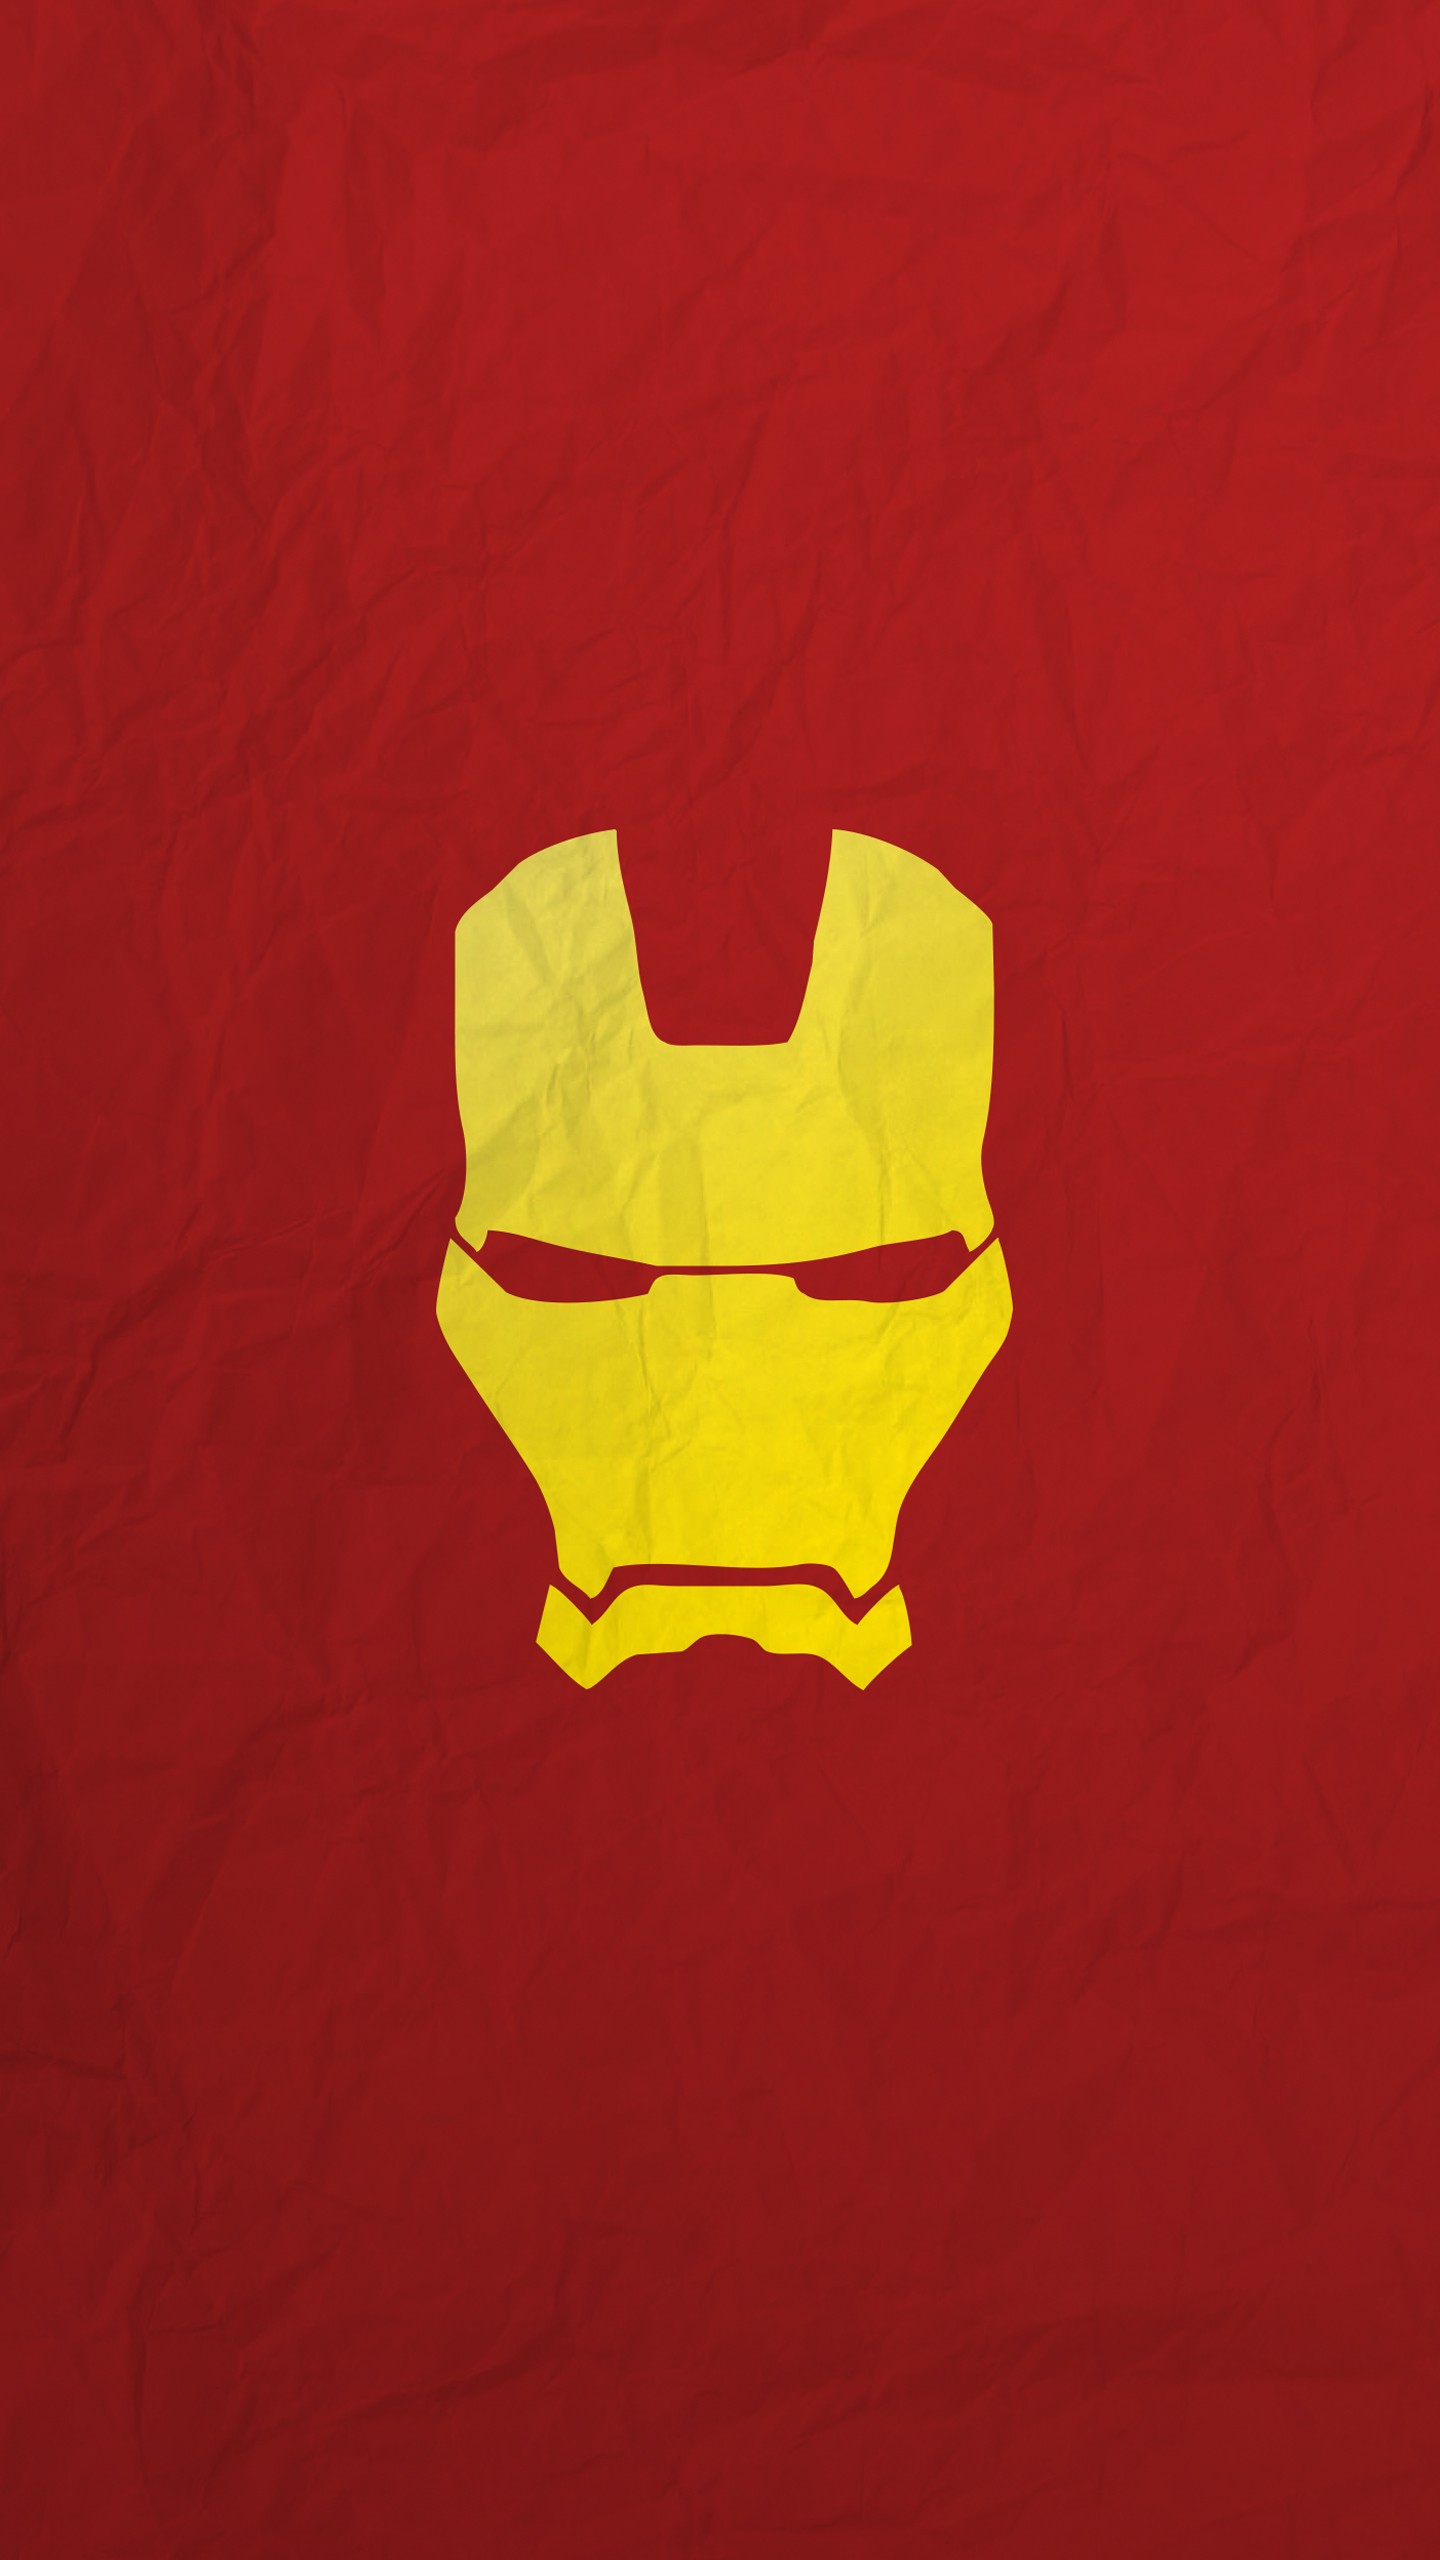 Superhero Wallpaper 03 - Cartoon Iron Man Head - HD Wallpaper 